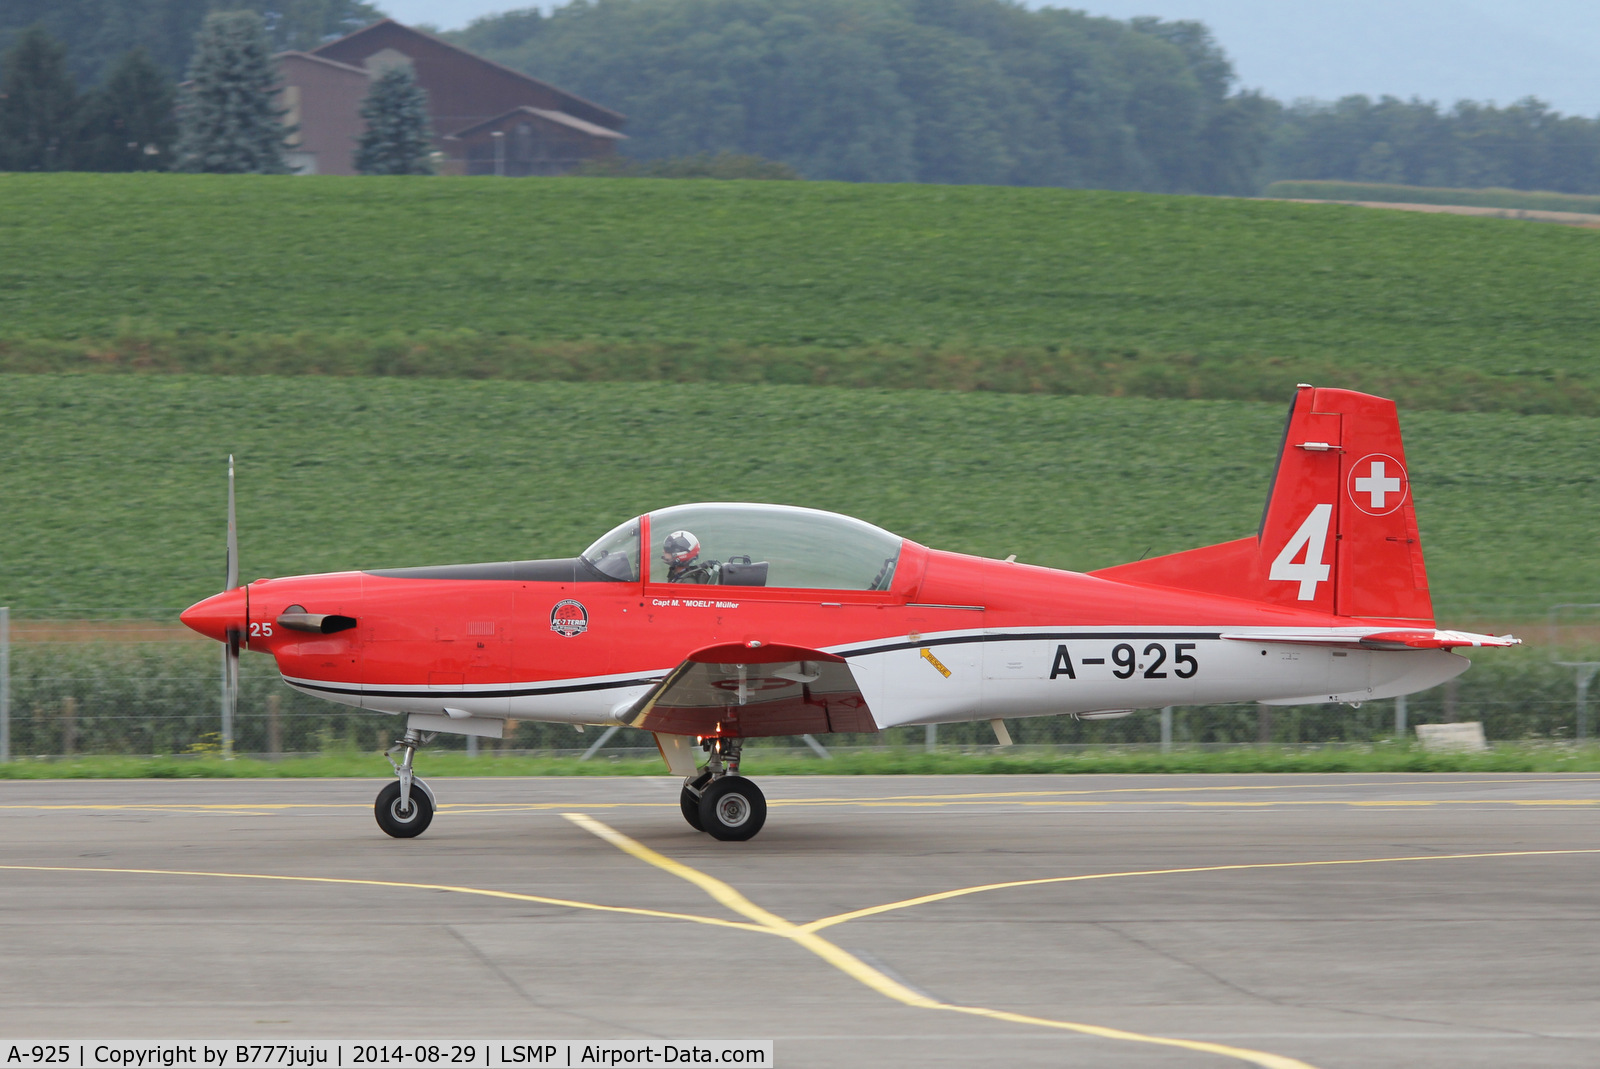 A-925, 1983 Pilatus PC-7 Turbo Trainer C/N 333, at AIR14